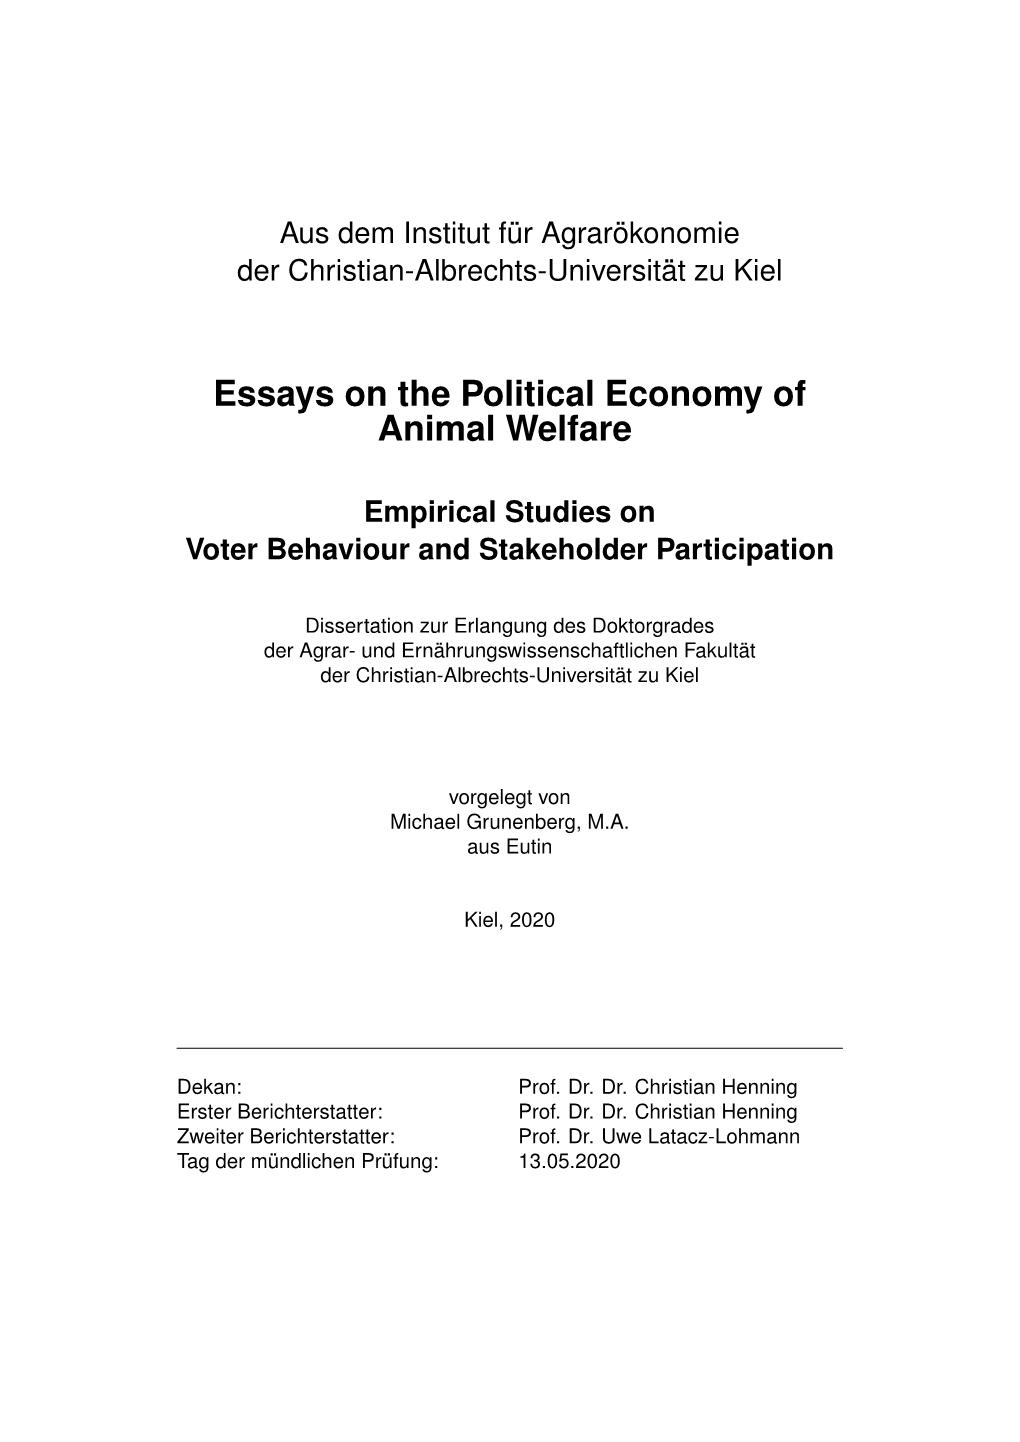 Essays on the Political Economy of Animal Welfare